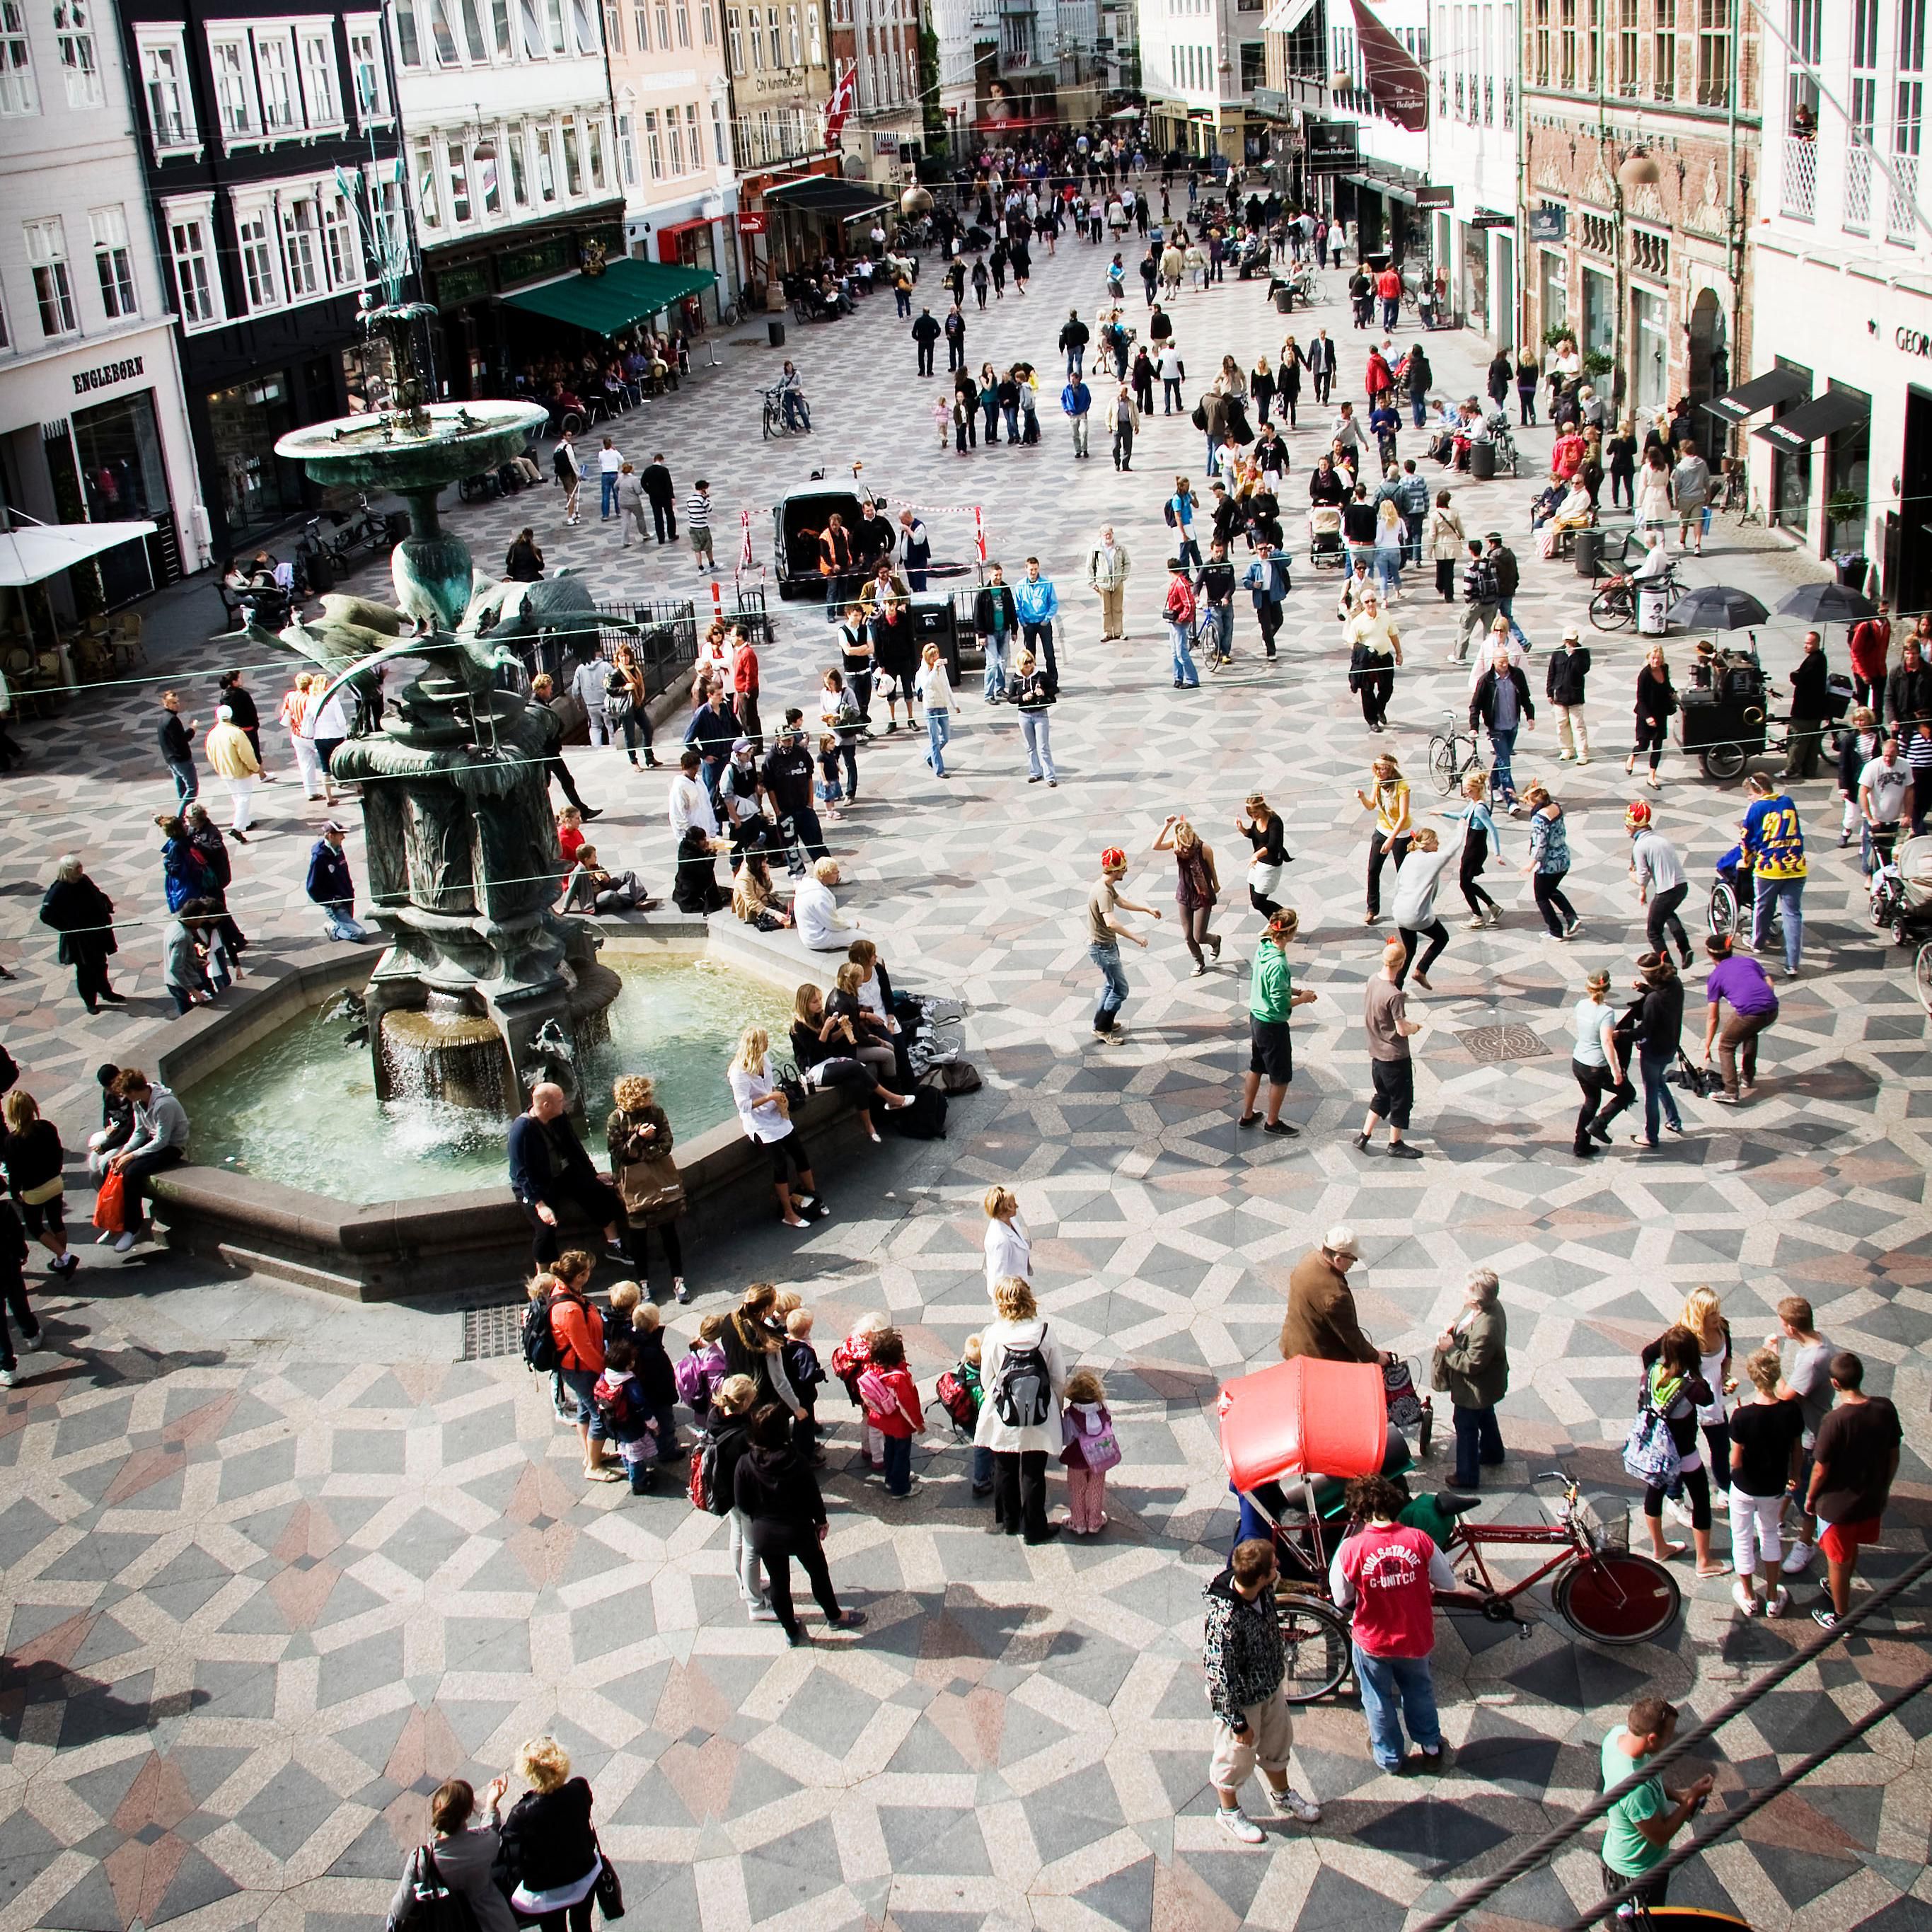 Stroeget is the main shopping street of Copenhagen